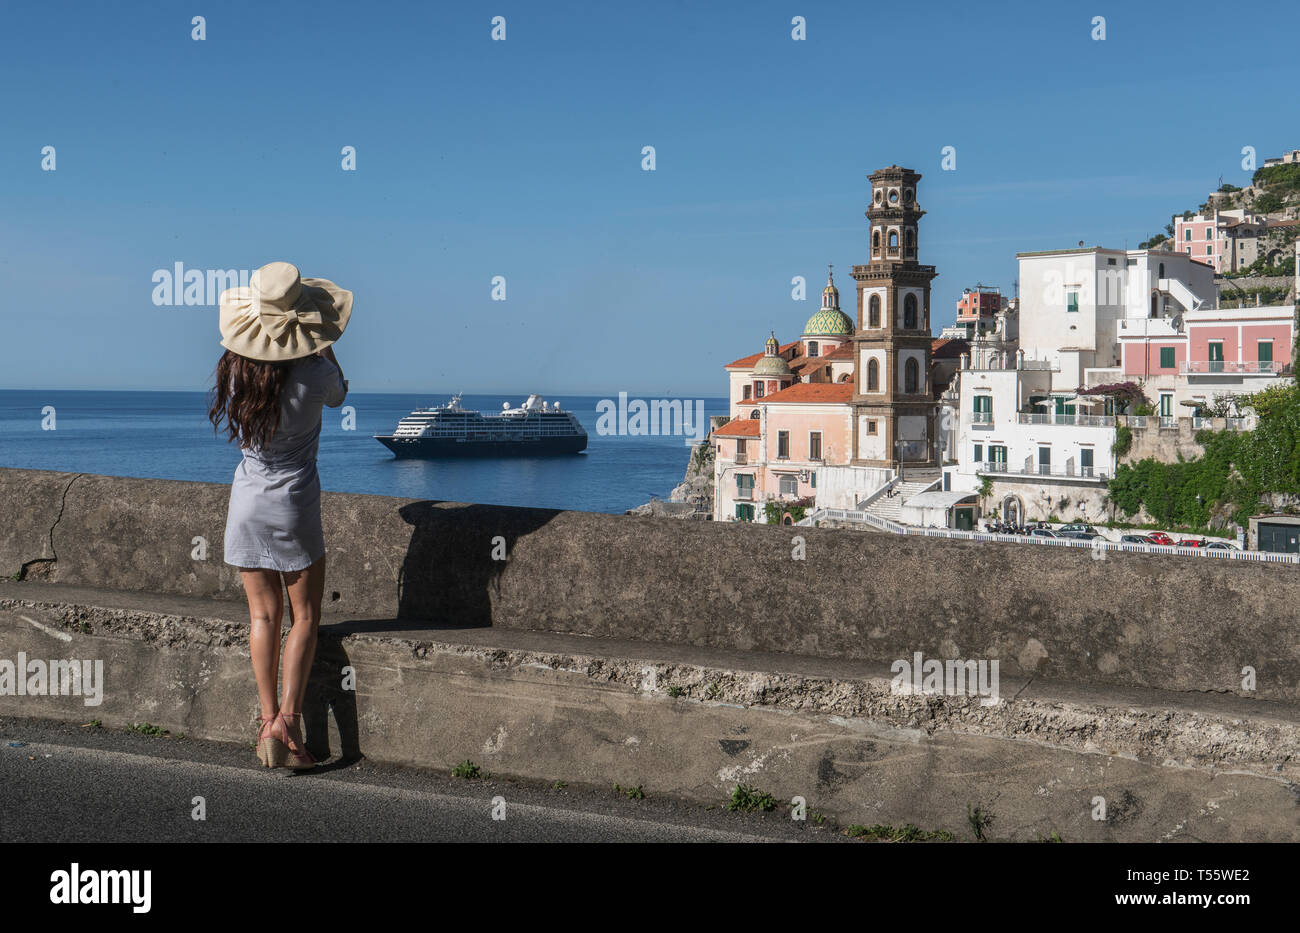 Woman wearing hat by Atrani, Italy Stock Photo